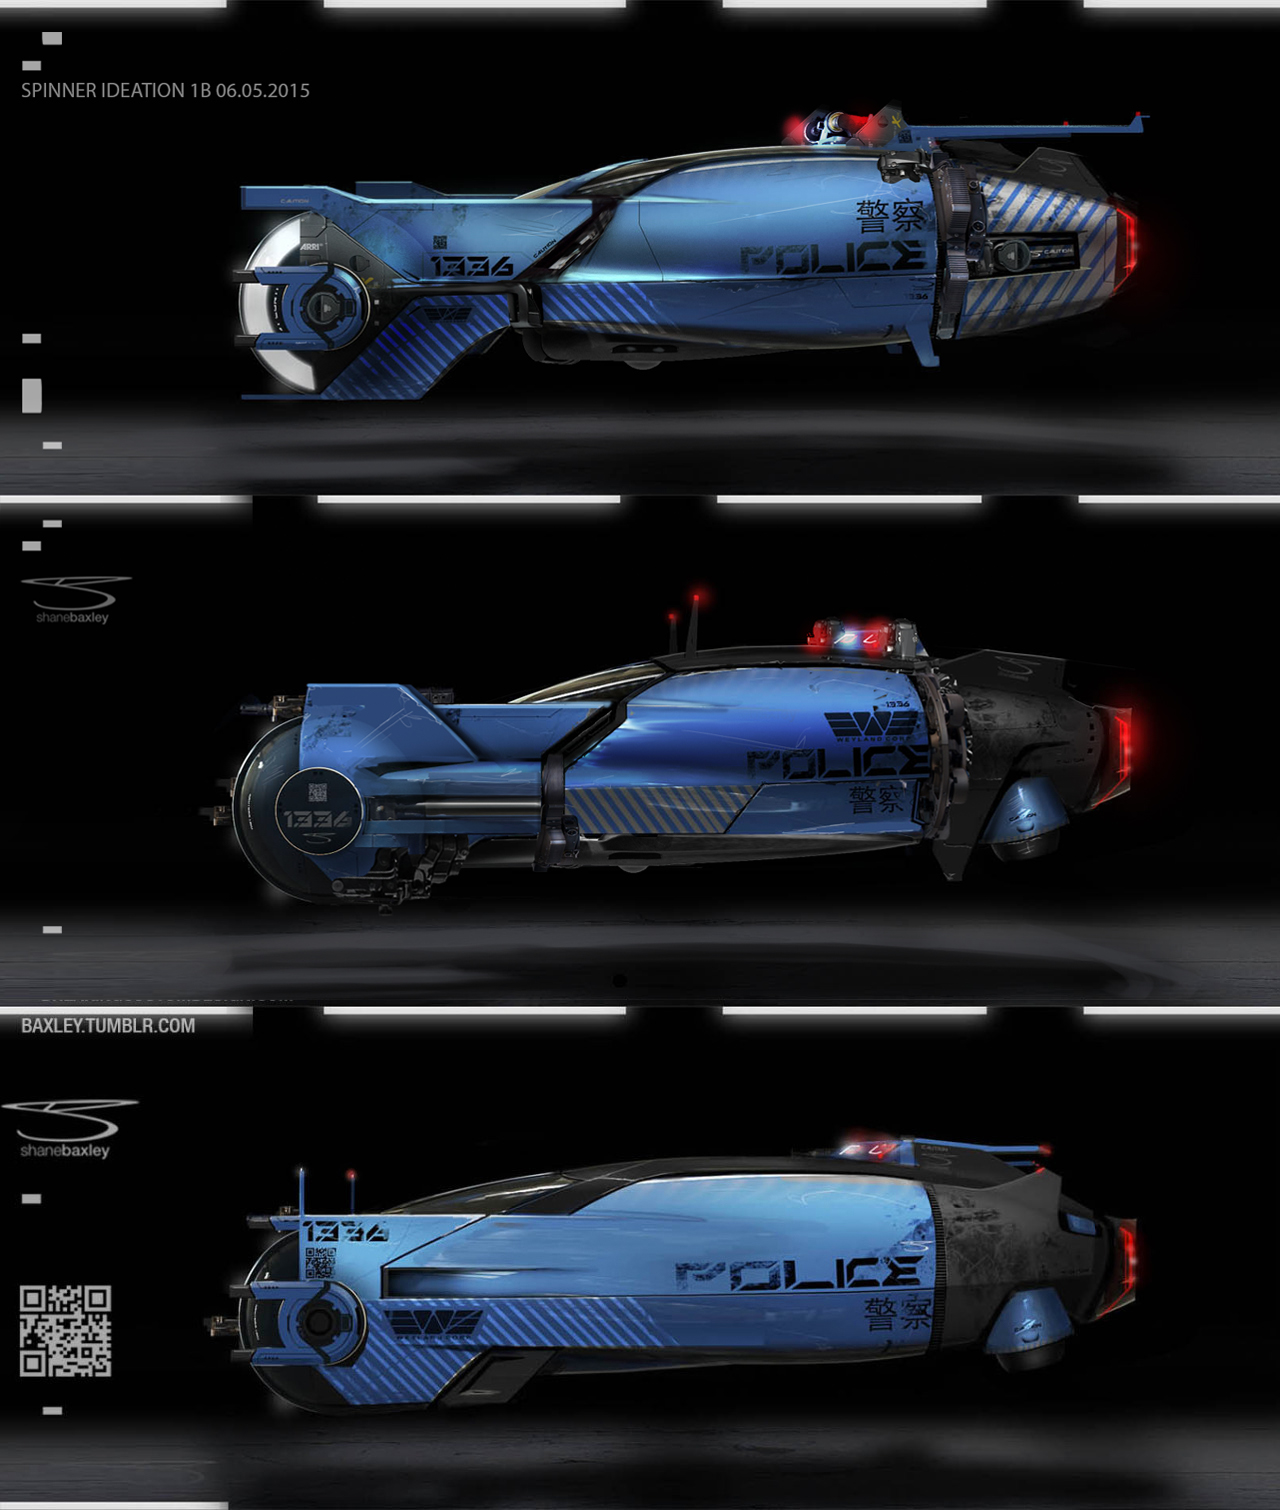 Blade Runner Spinner Concepts 2015